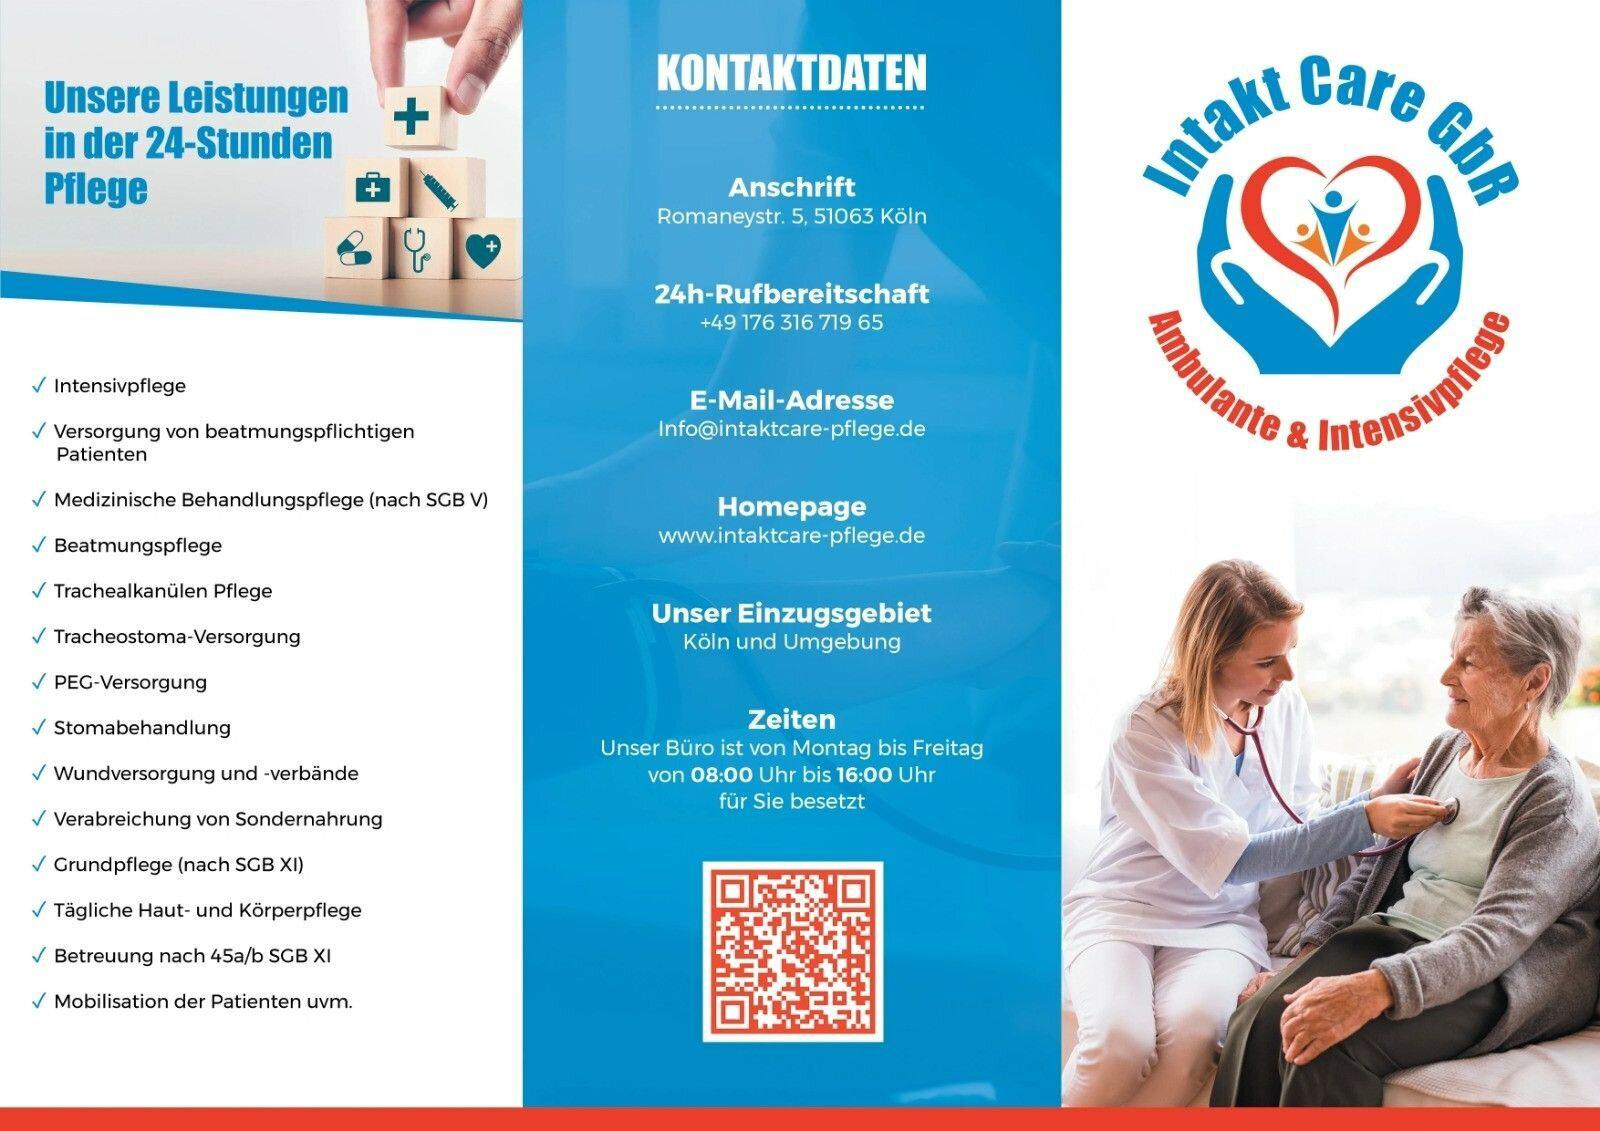 Intakt Care GbR Ambulante & Intensivpflege Köln 0221 88066970